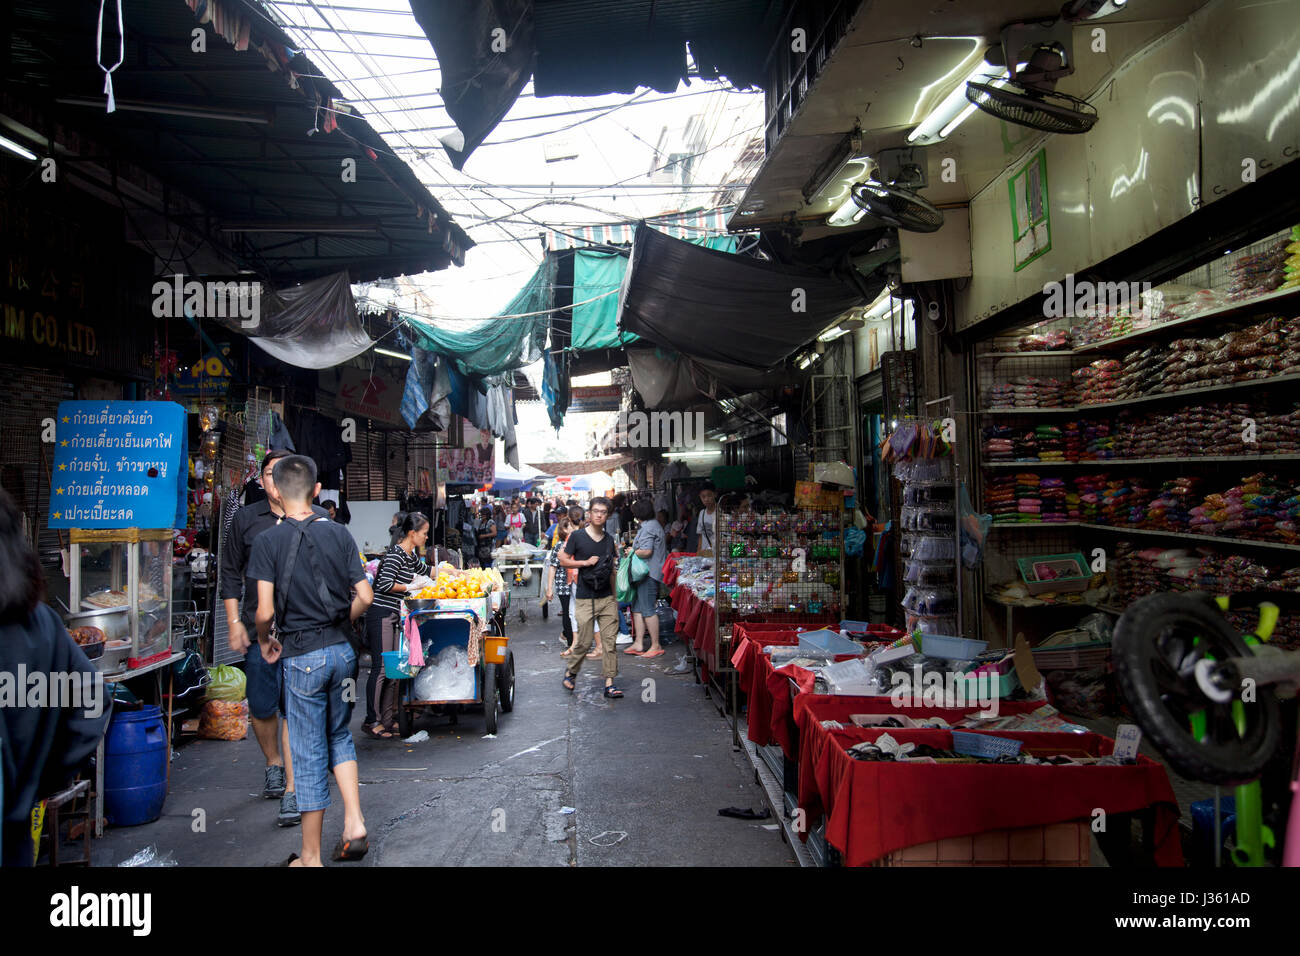 Phahurat Market, Little India, à Bangkok - Thaïlande Banque D'Images